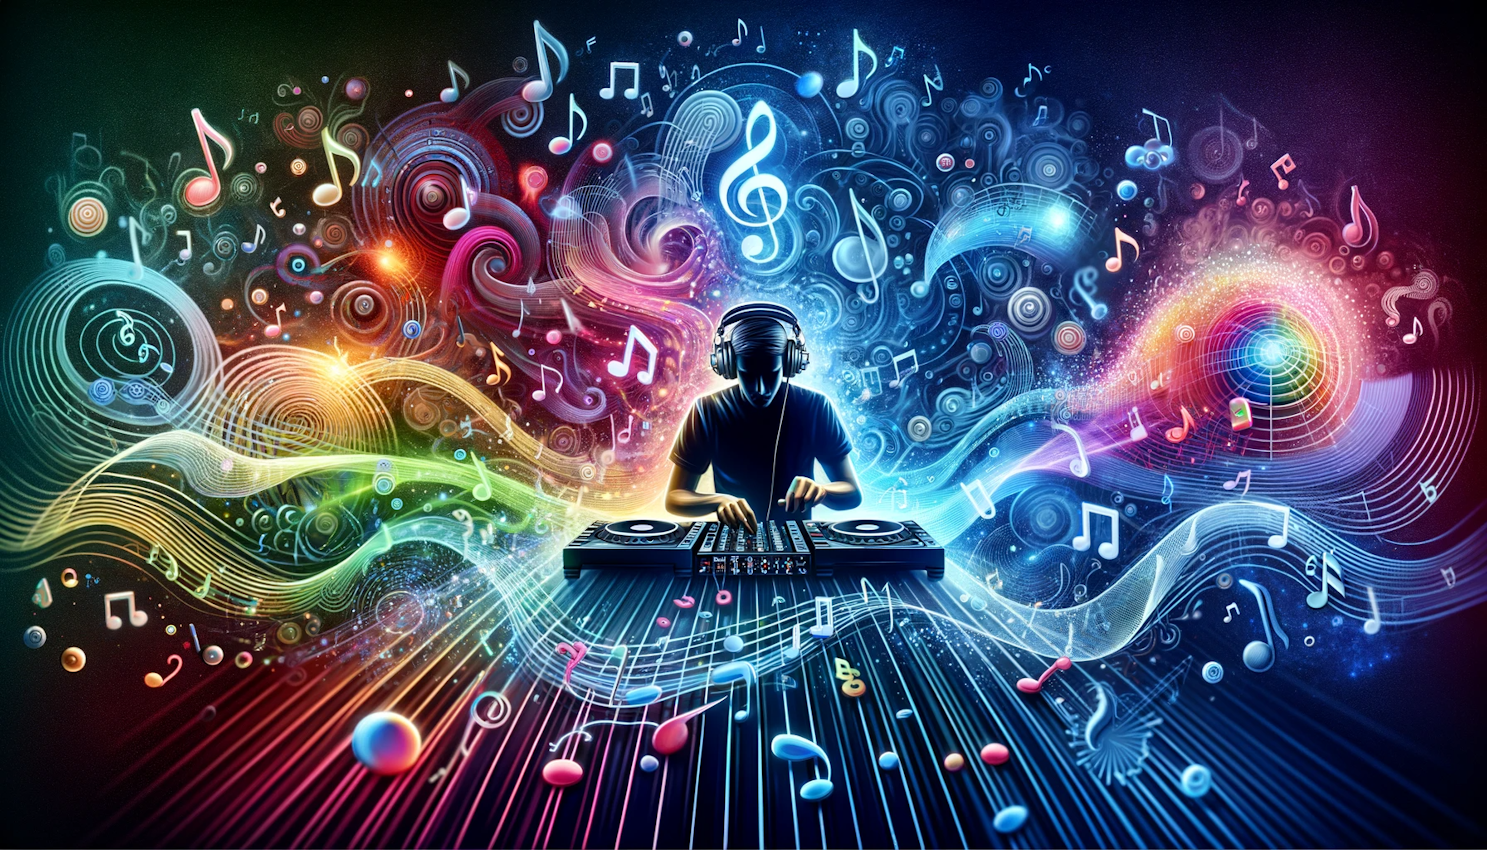 DJs understanding musical keys